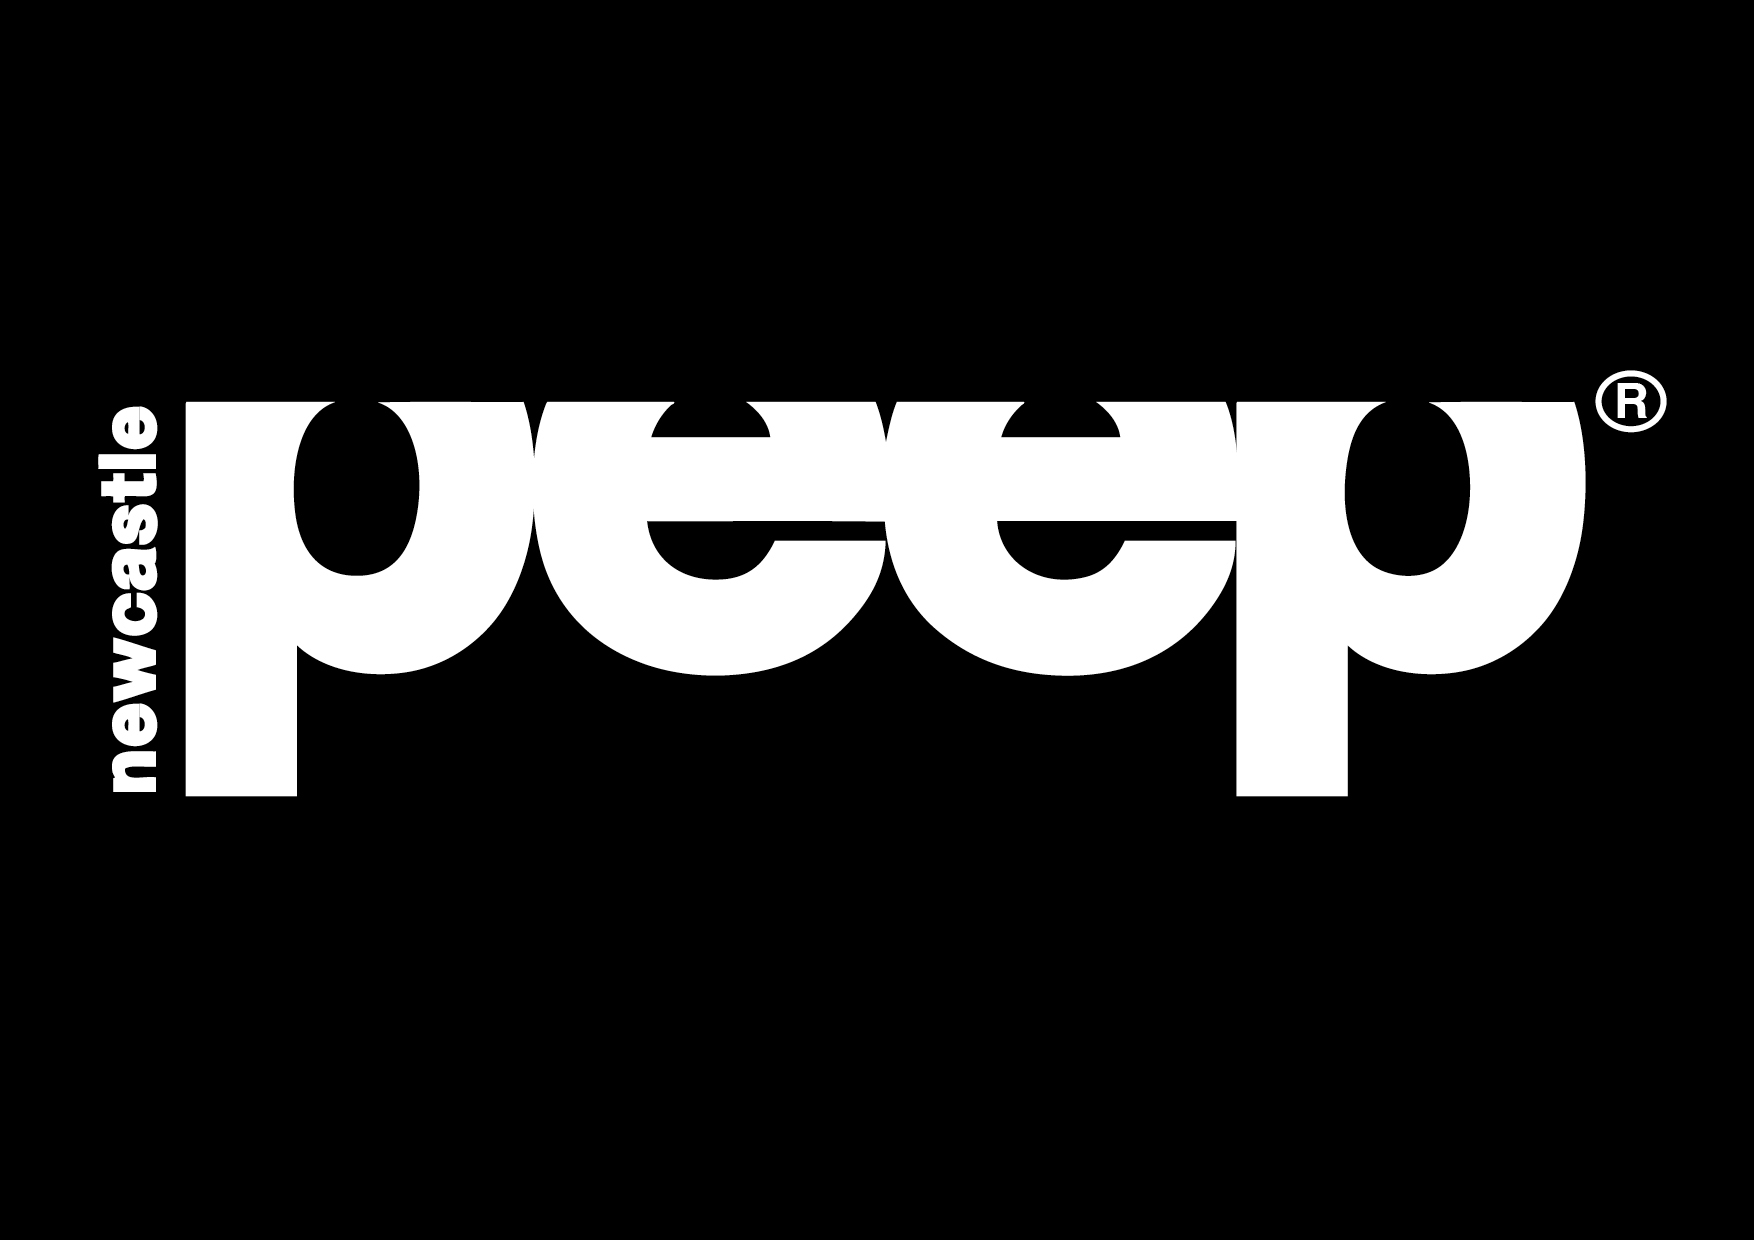 peep newcastle logo. registered trademark of the peep magazine brand and publication